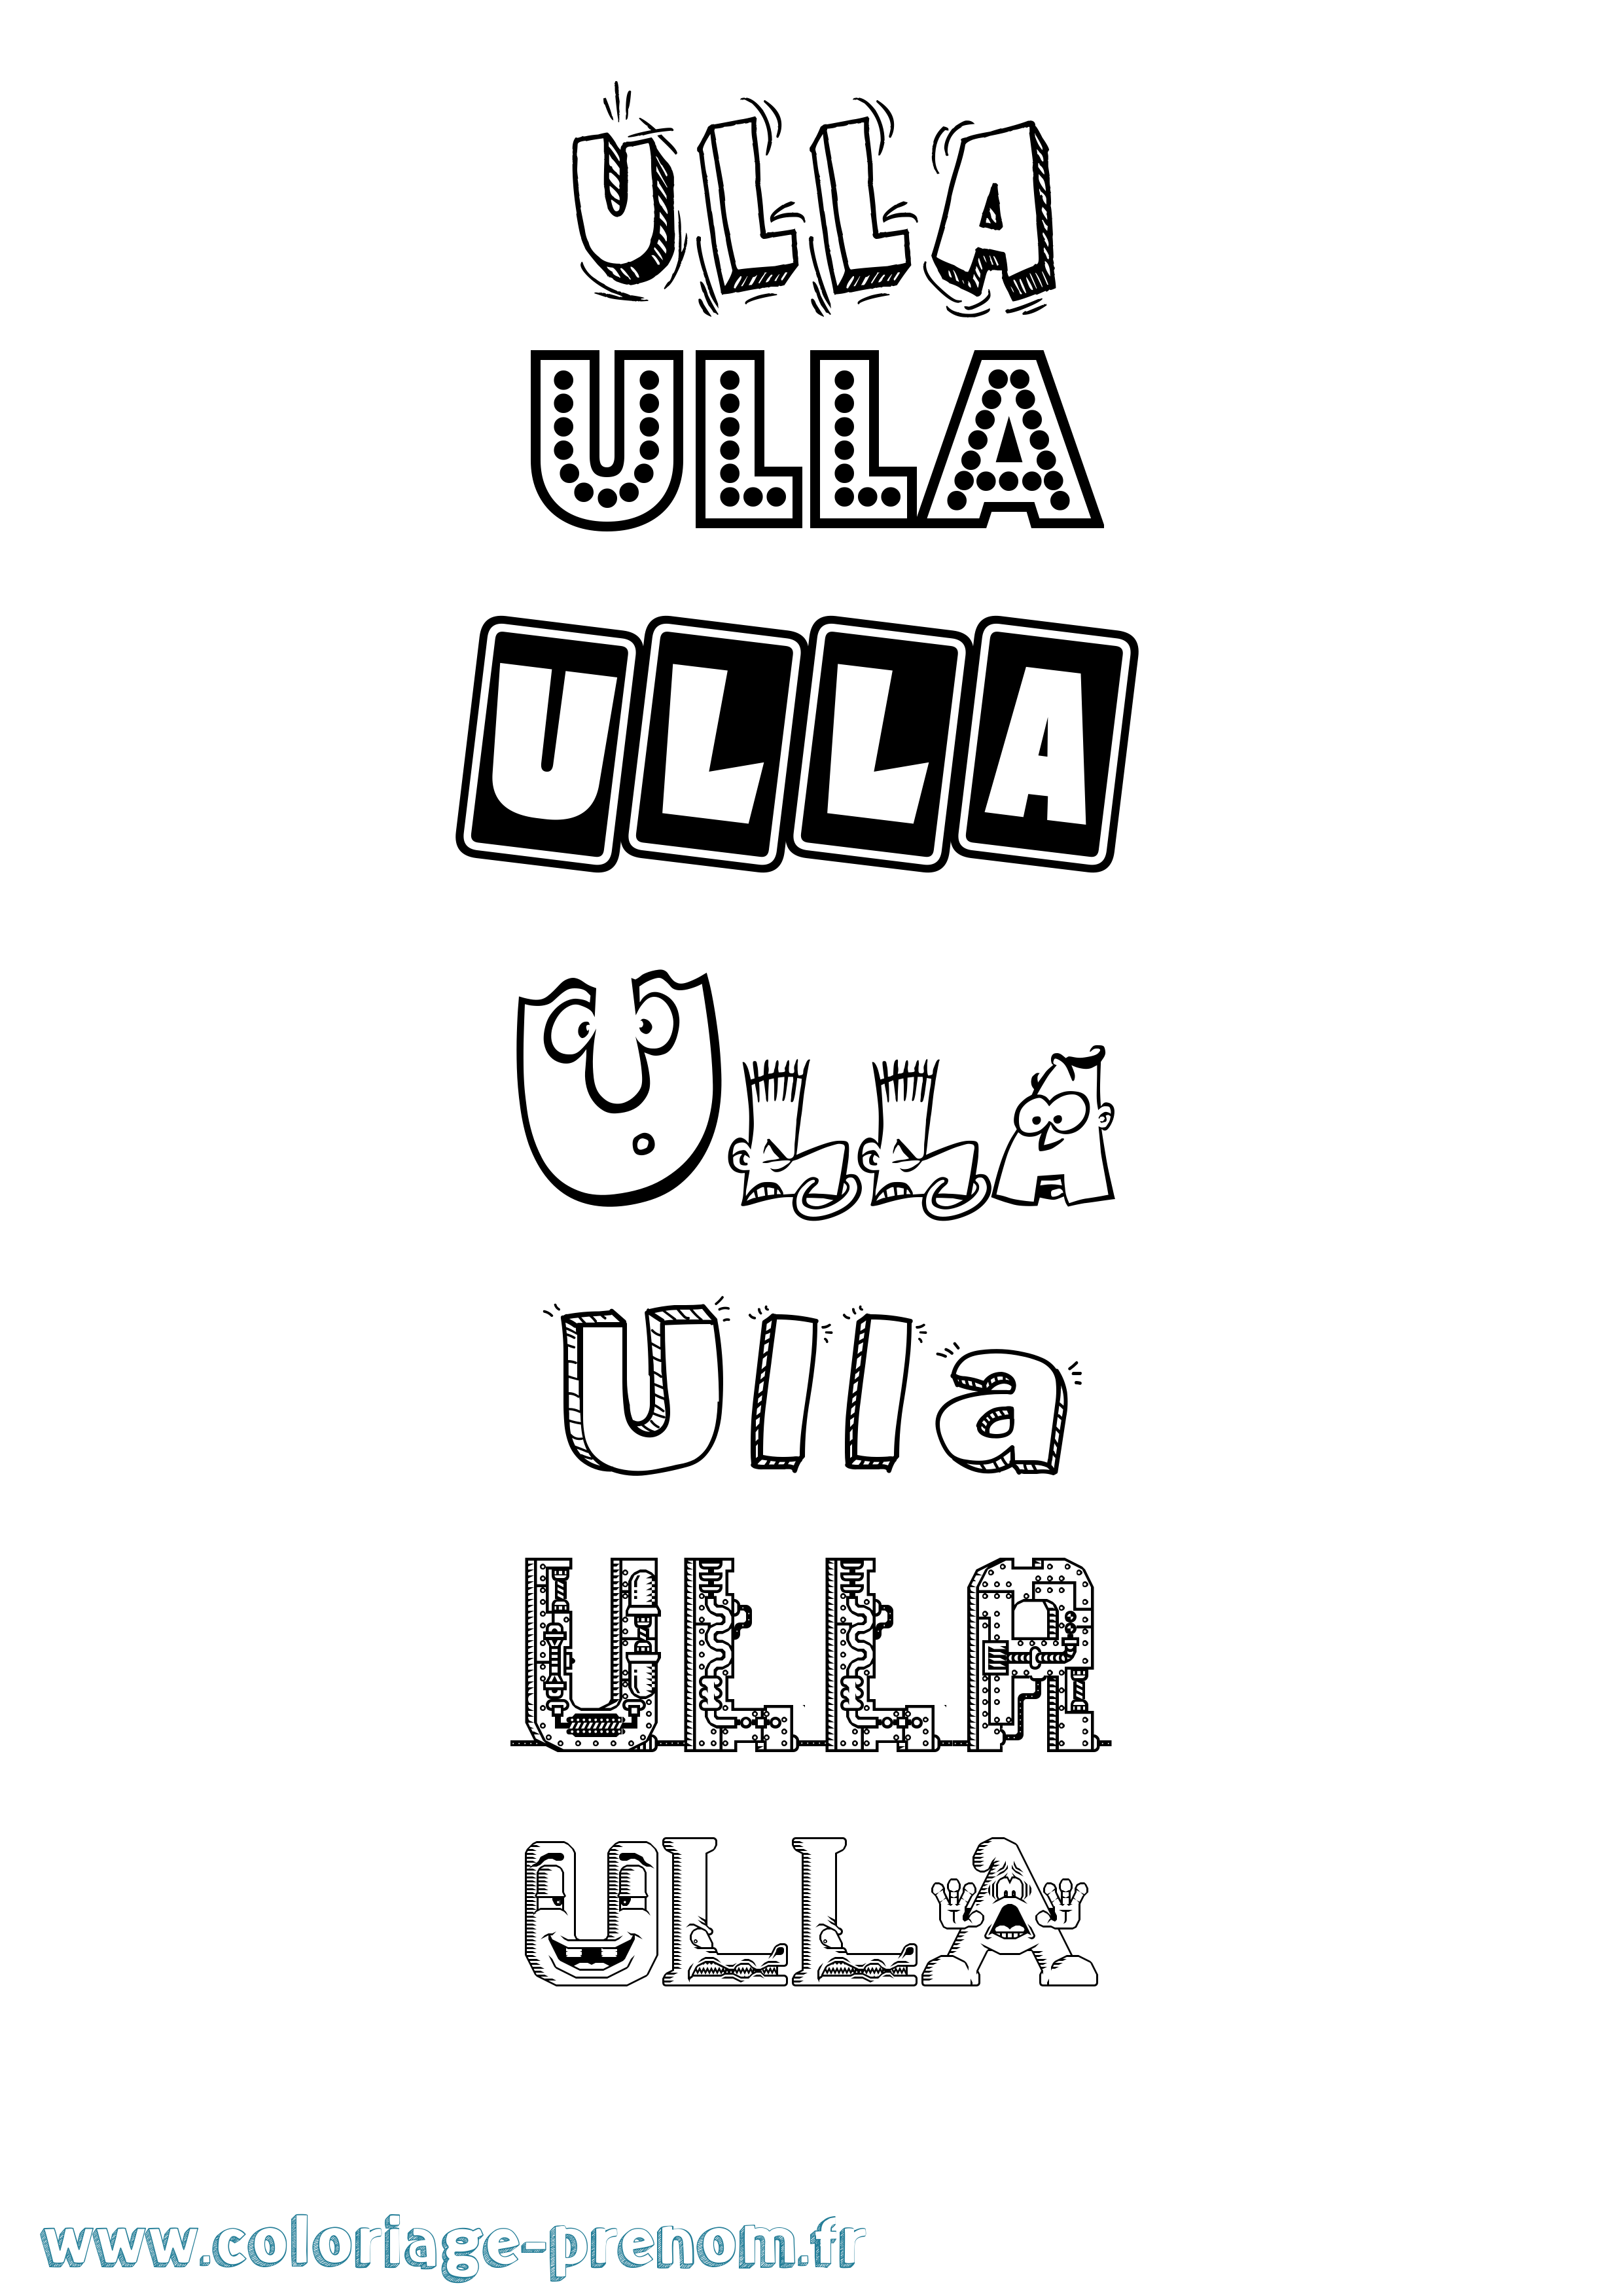 Coloriage prénom Ulla Fun